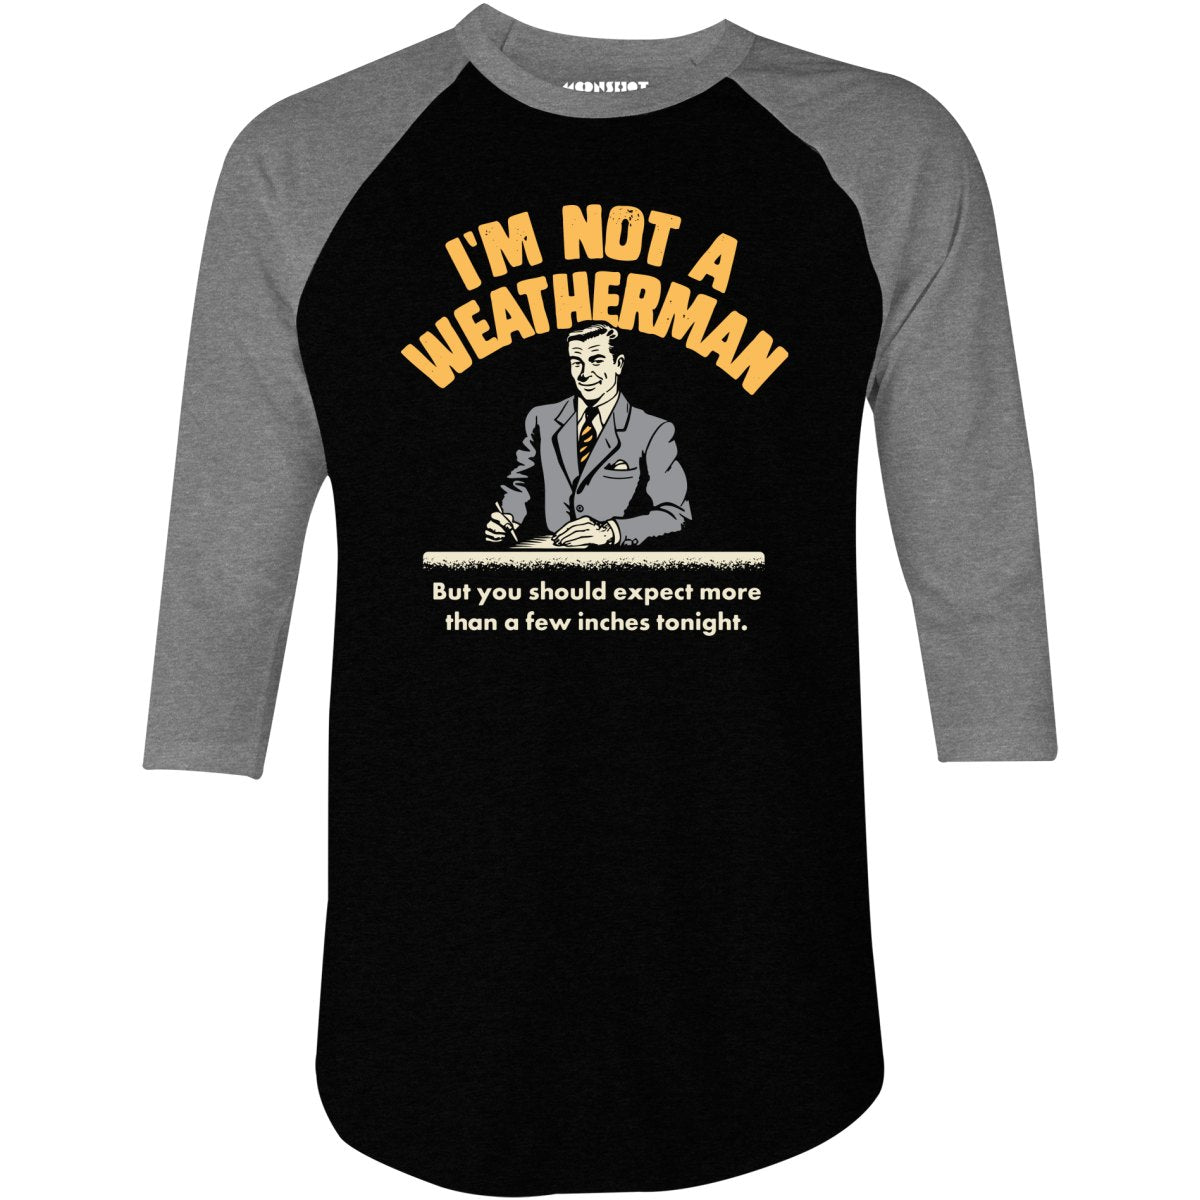 I'm Not a Weatherman - 3/4 Sleeve Raglan T-Shirt